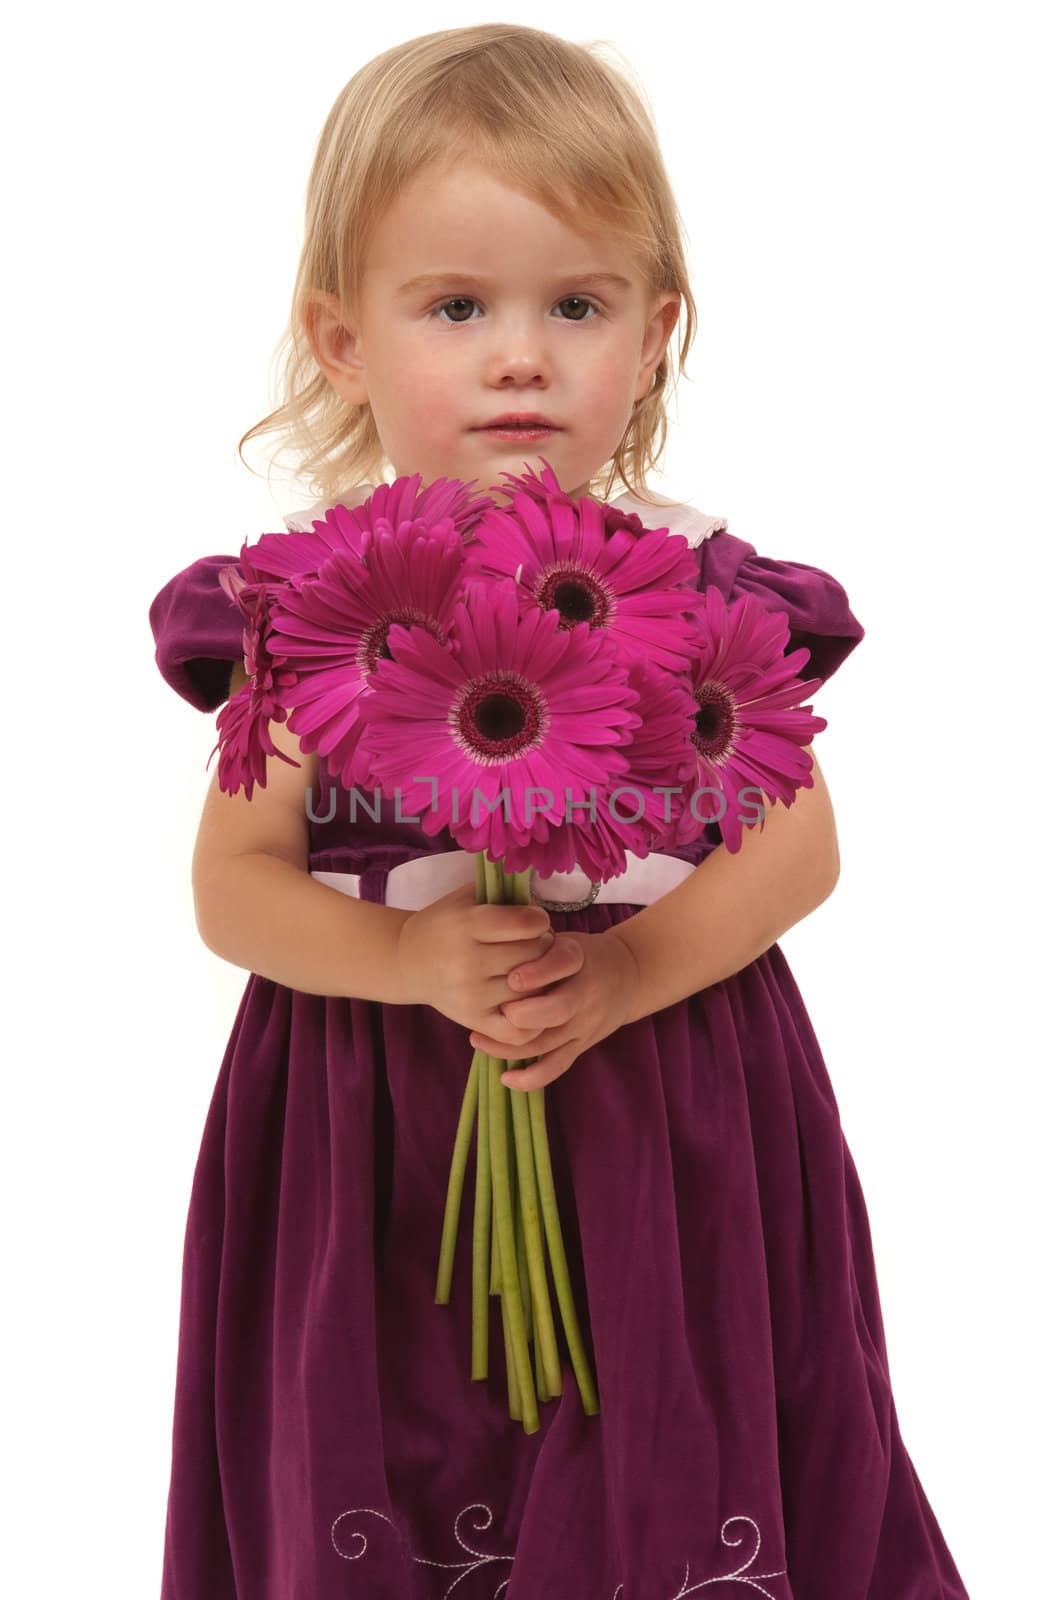 Beautiful little girl giving flowers 